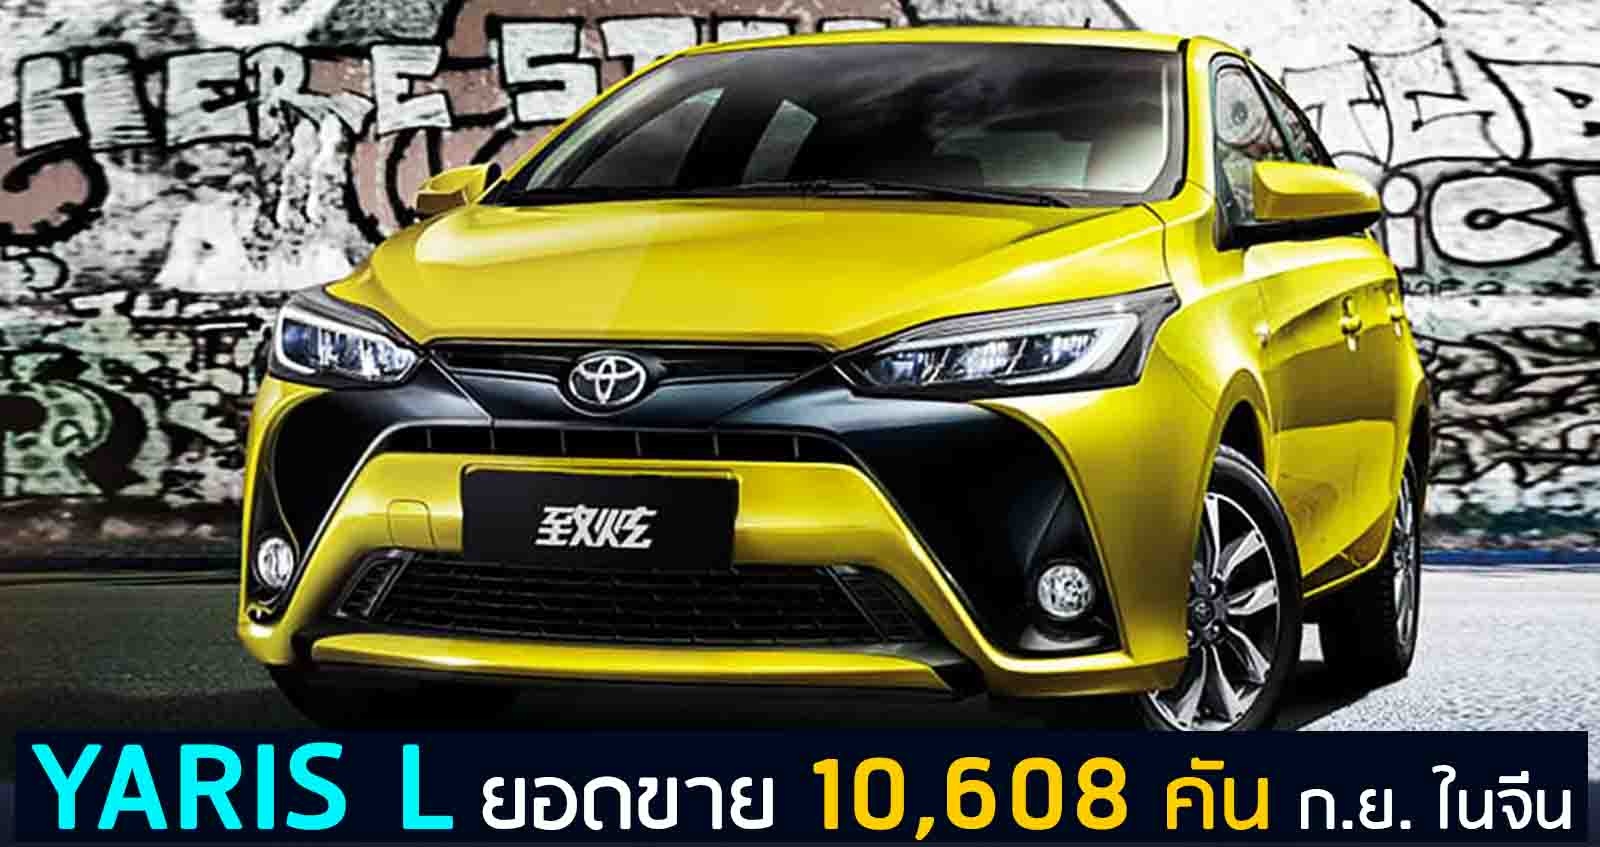 Toyota YARIS L ยอดขาย 10,608 คัน กันยายน 2020 ในจีน